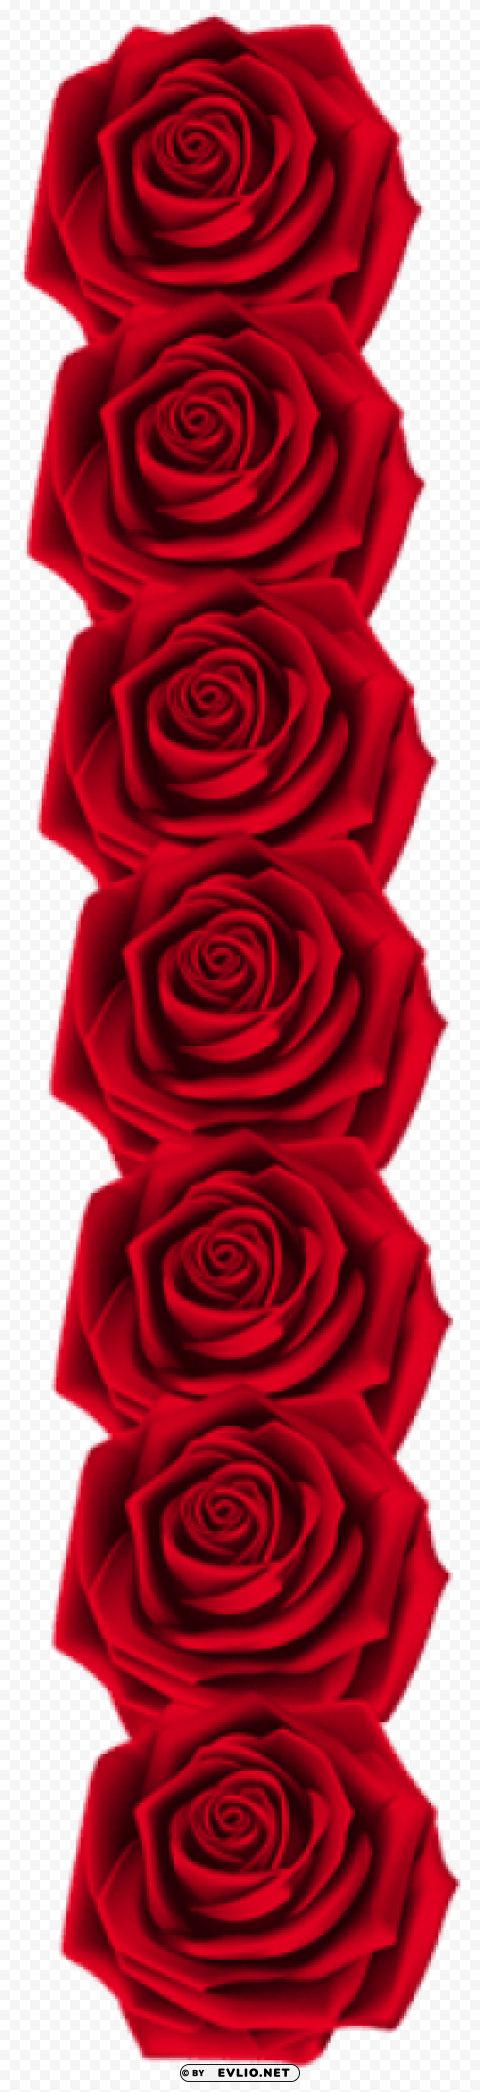 red roses decoration Transparent PNG stock photos